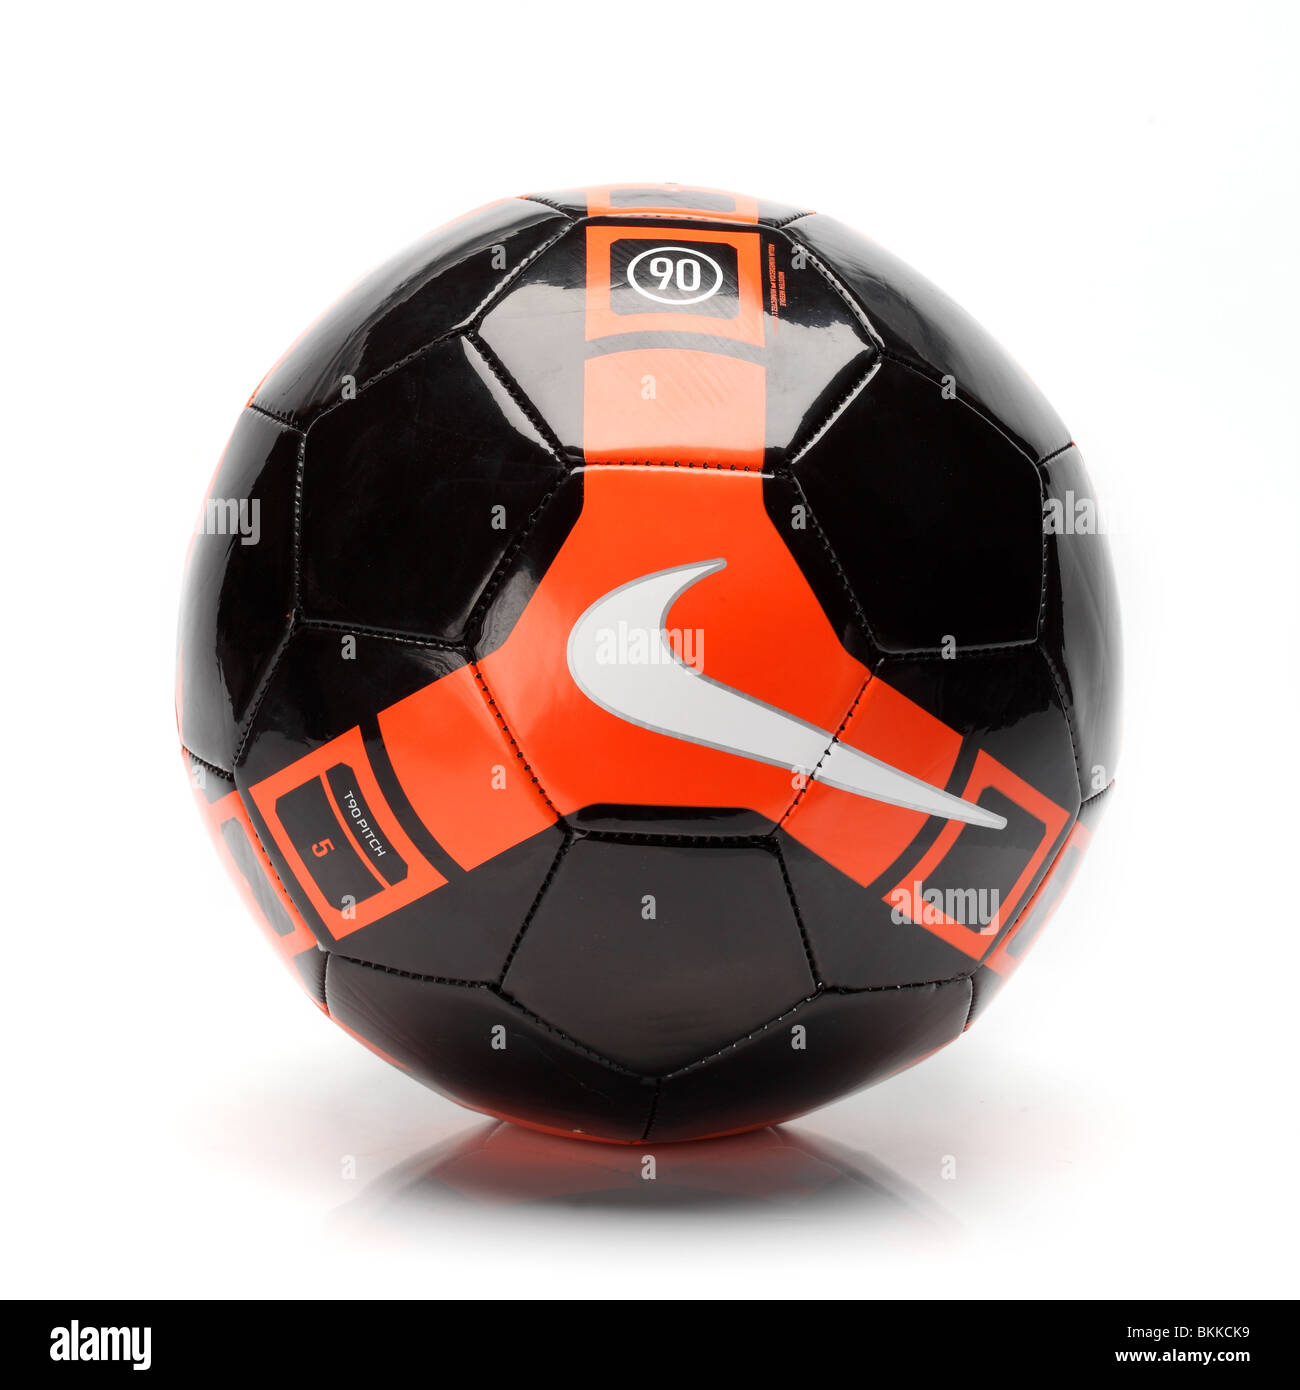 Nike team foot ball soccer football black orange T 90 Stock Photo